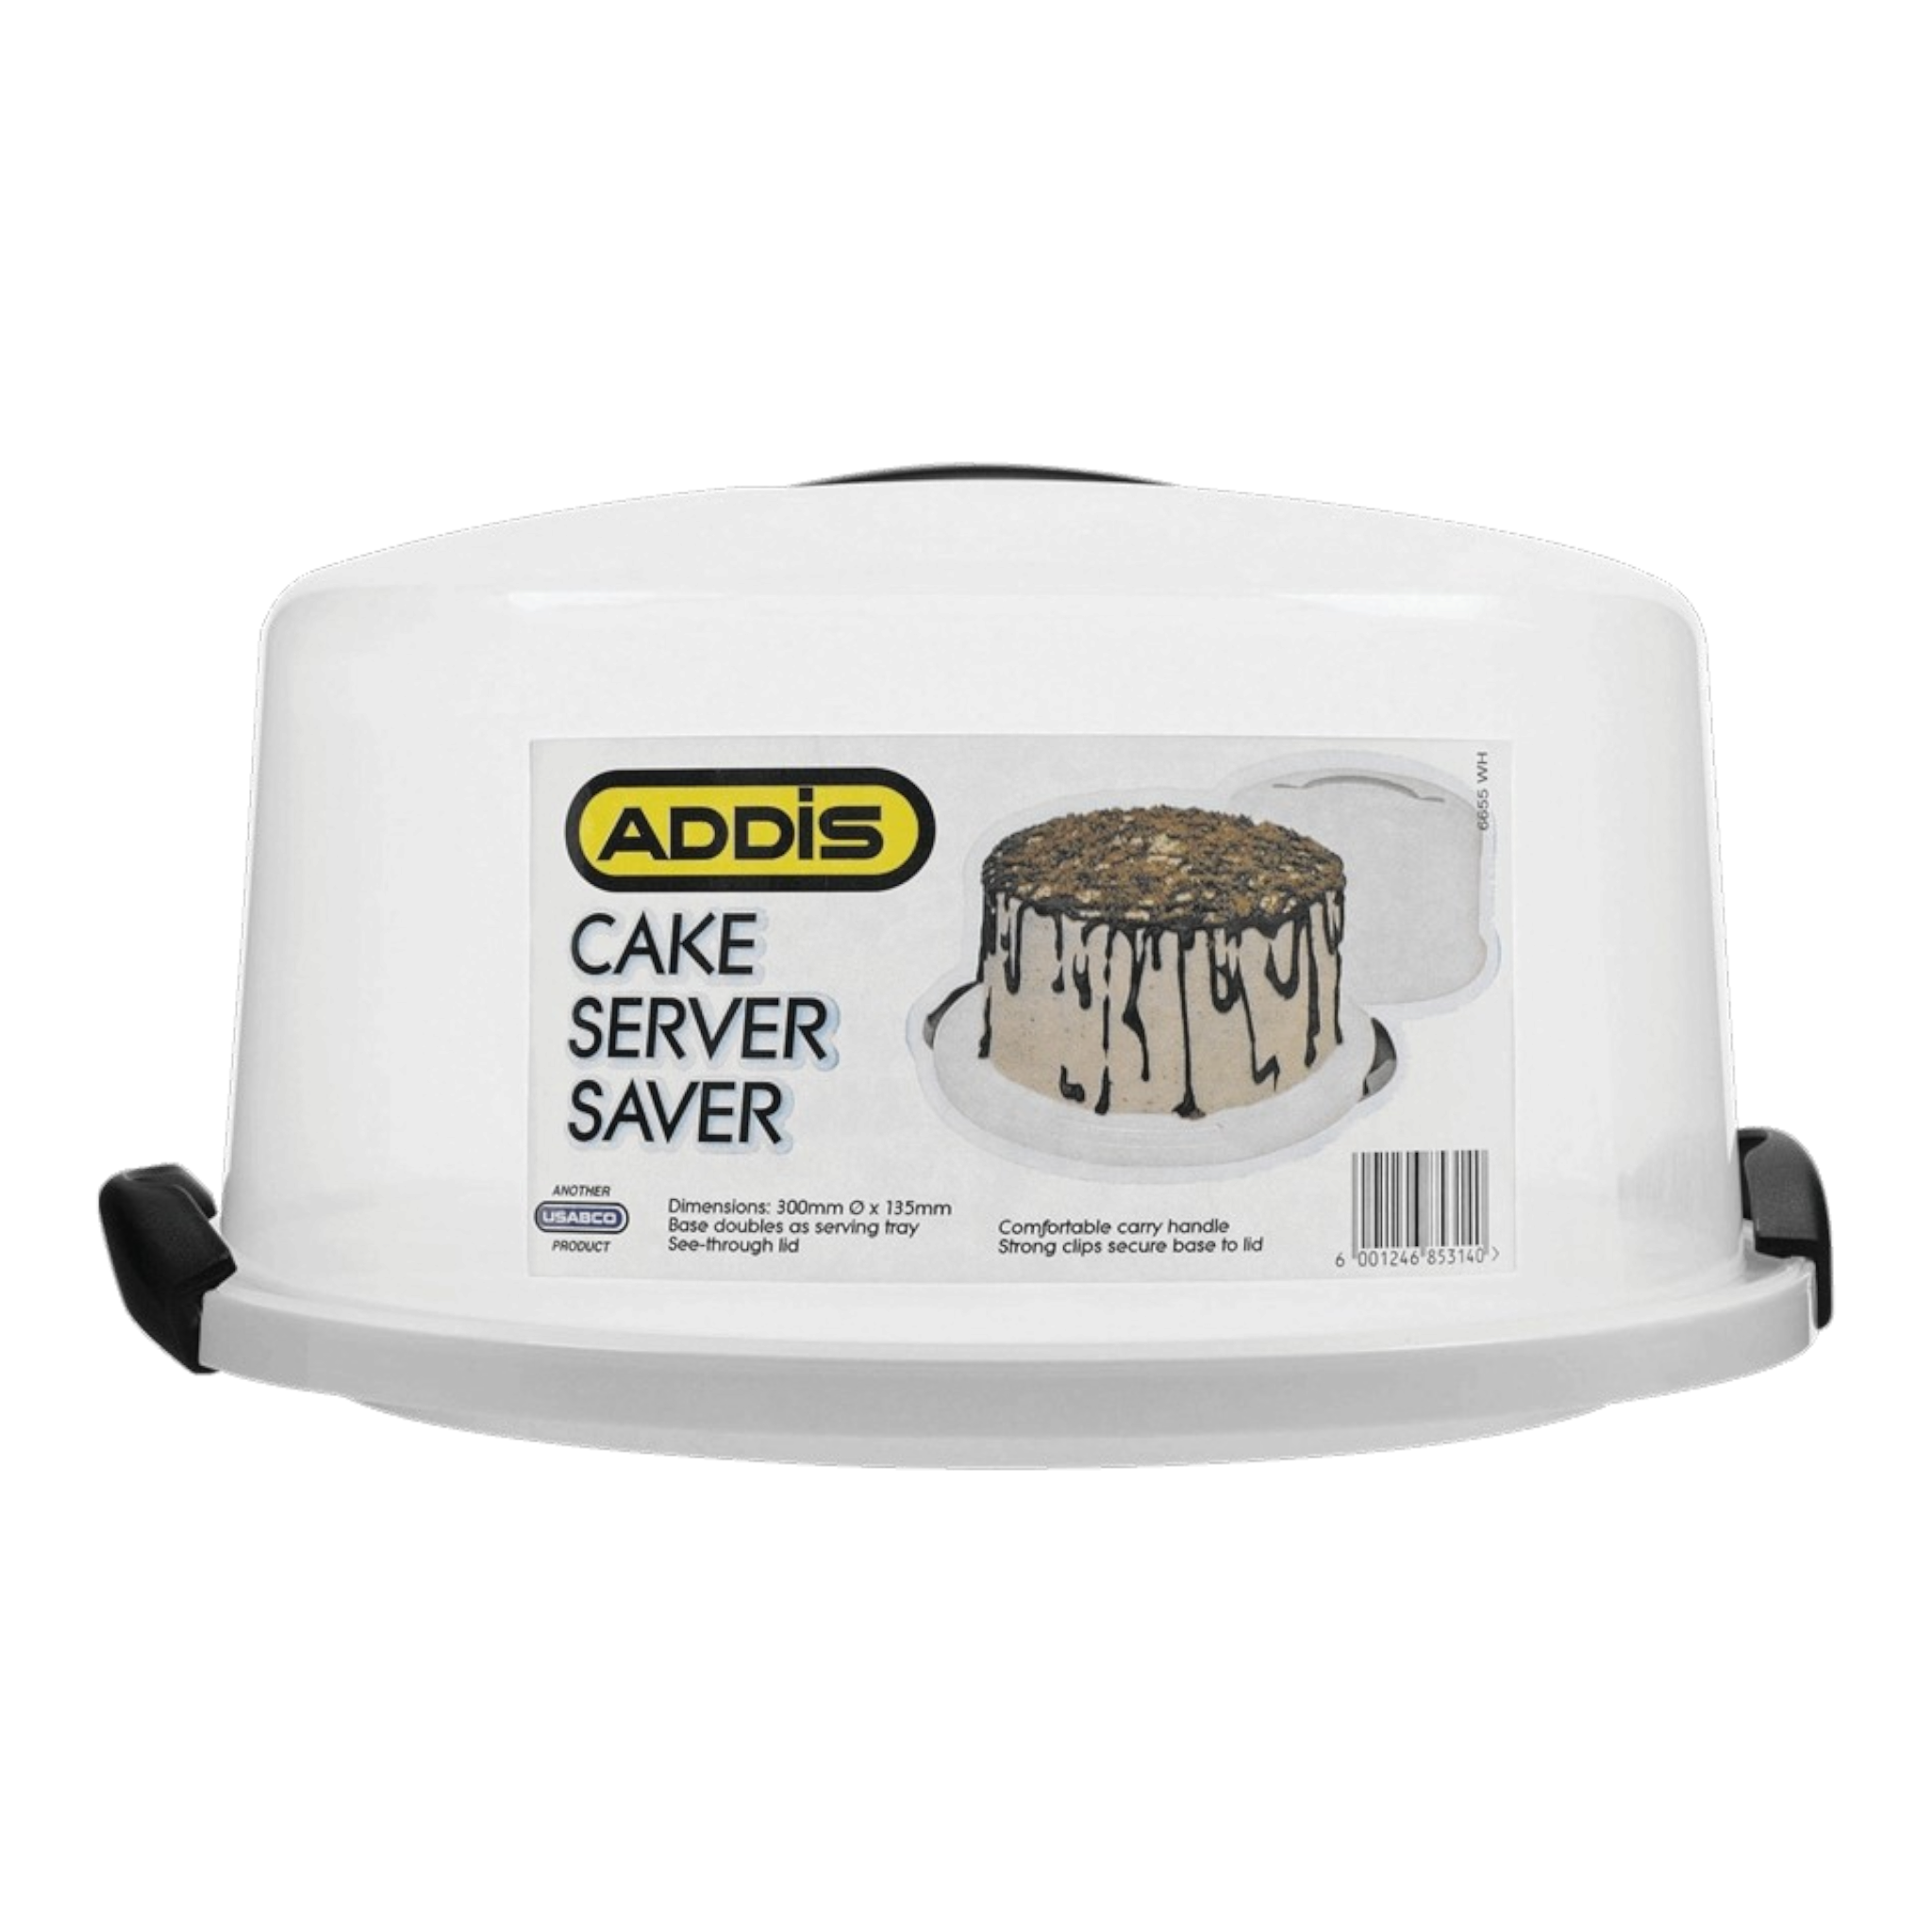 Adddis Cake Server Saver Small 300x135mm with Dome 6655